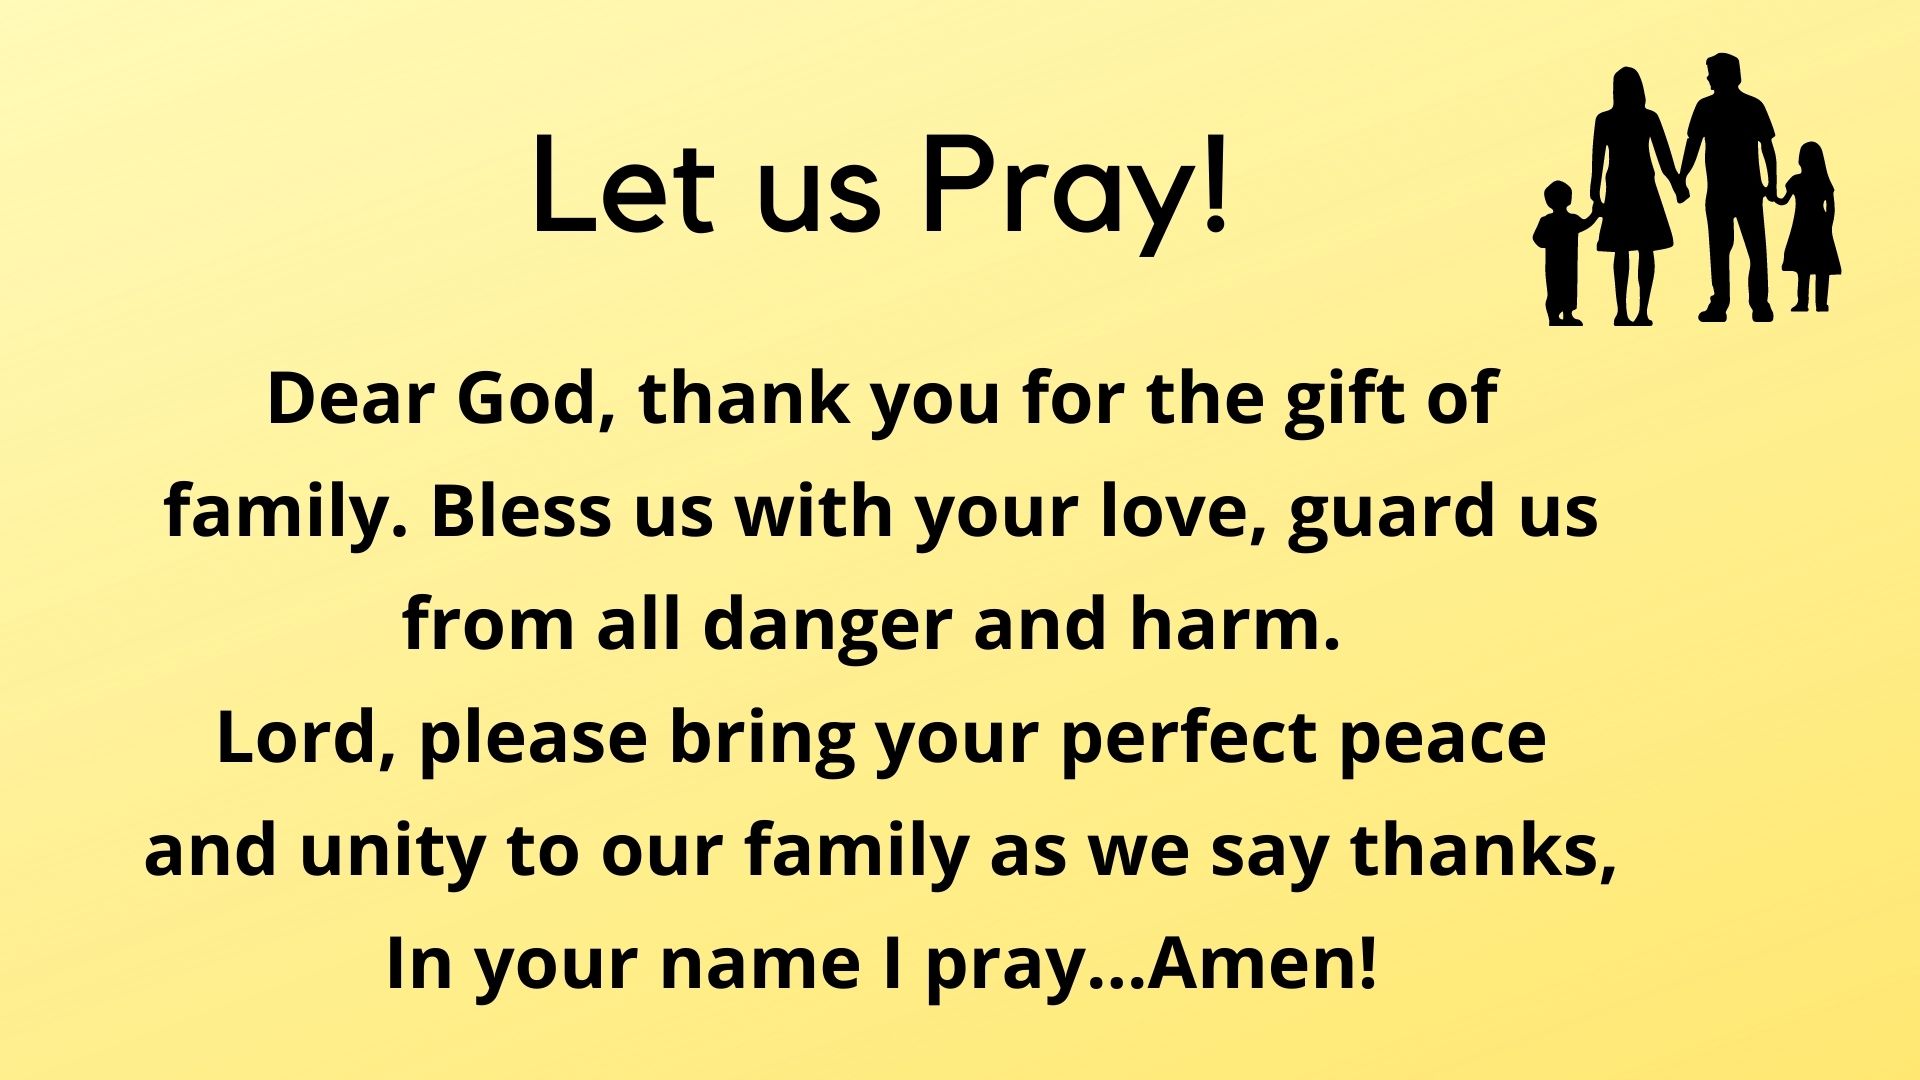 Let Us Pray!